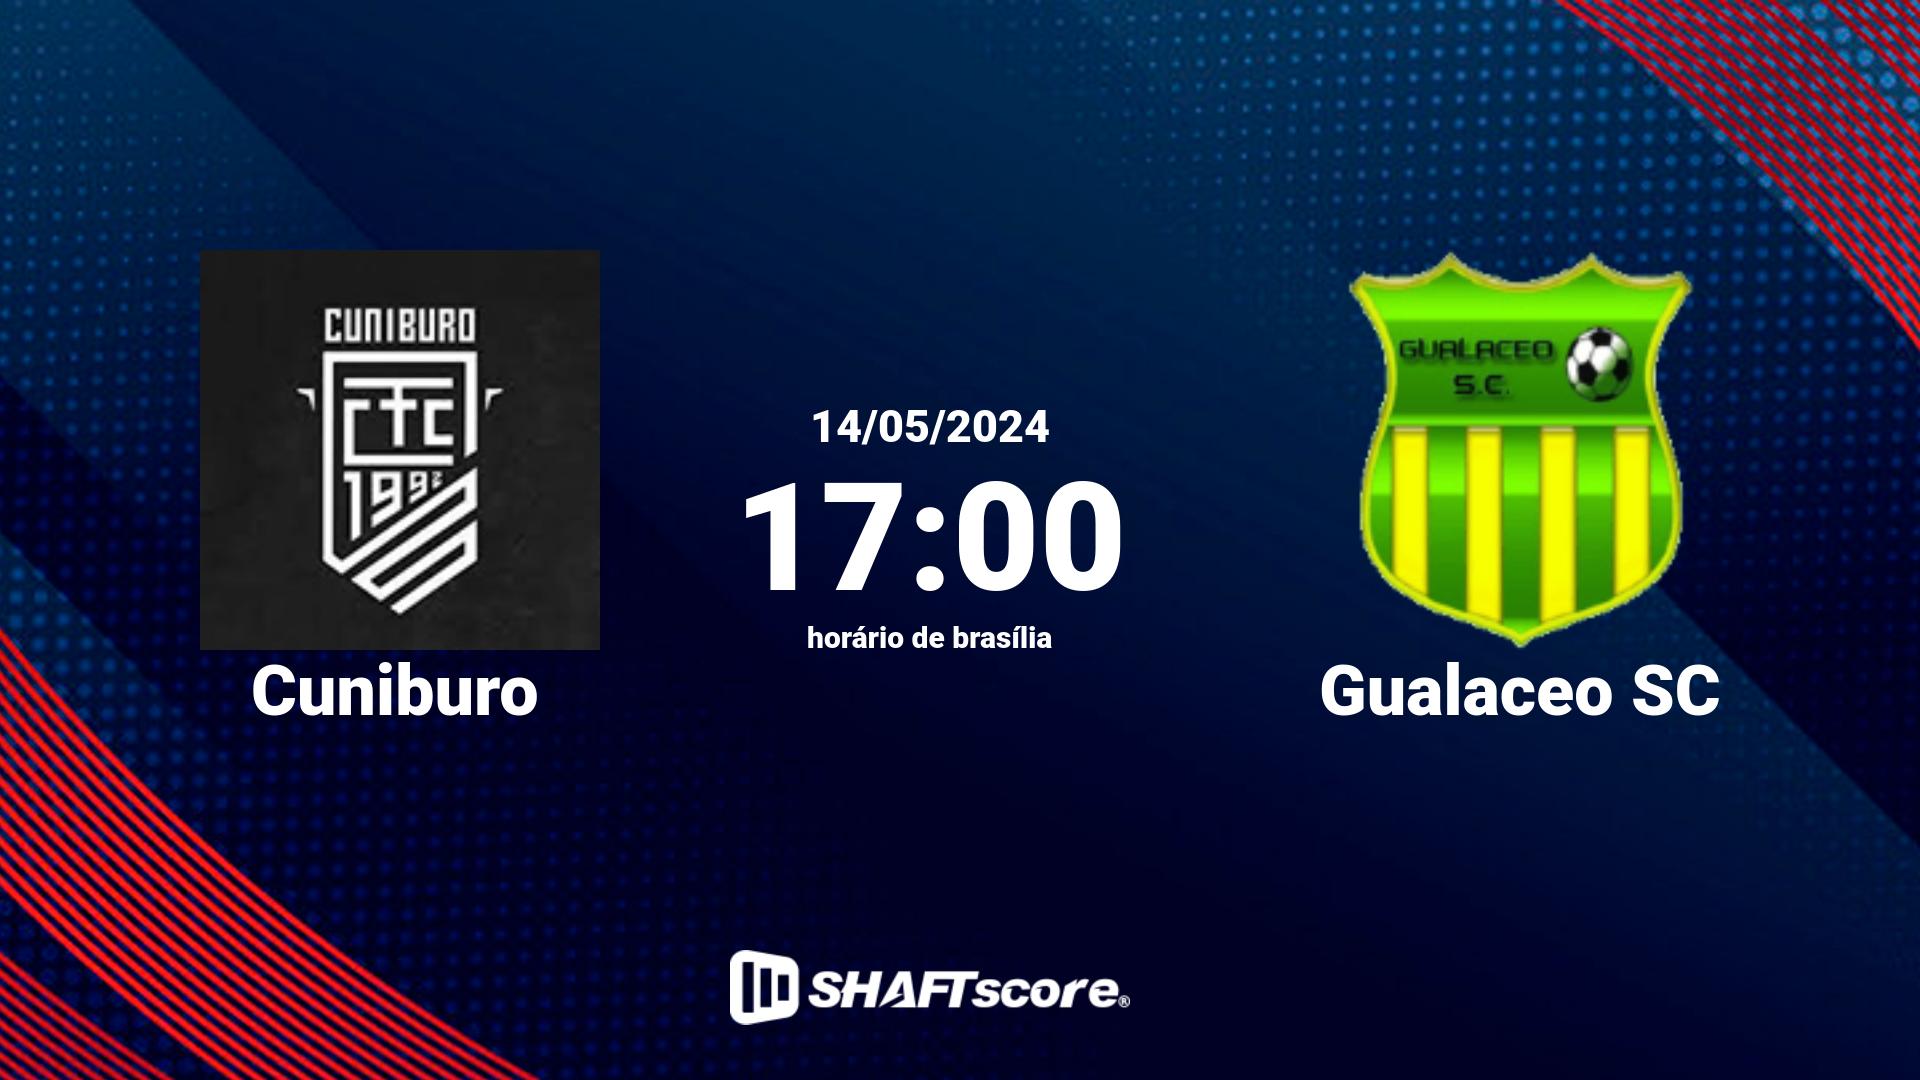 Estatísticas do jogo Cuniburo vs Gualaceo SC 14.05 17:00